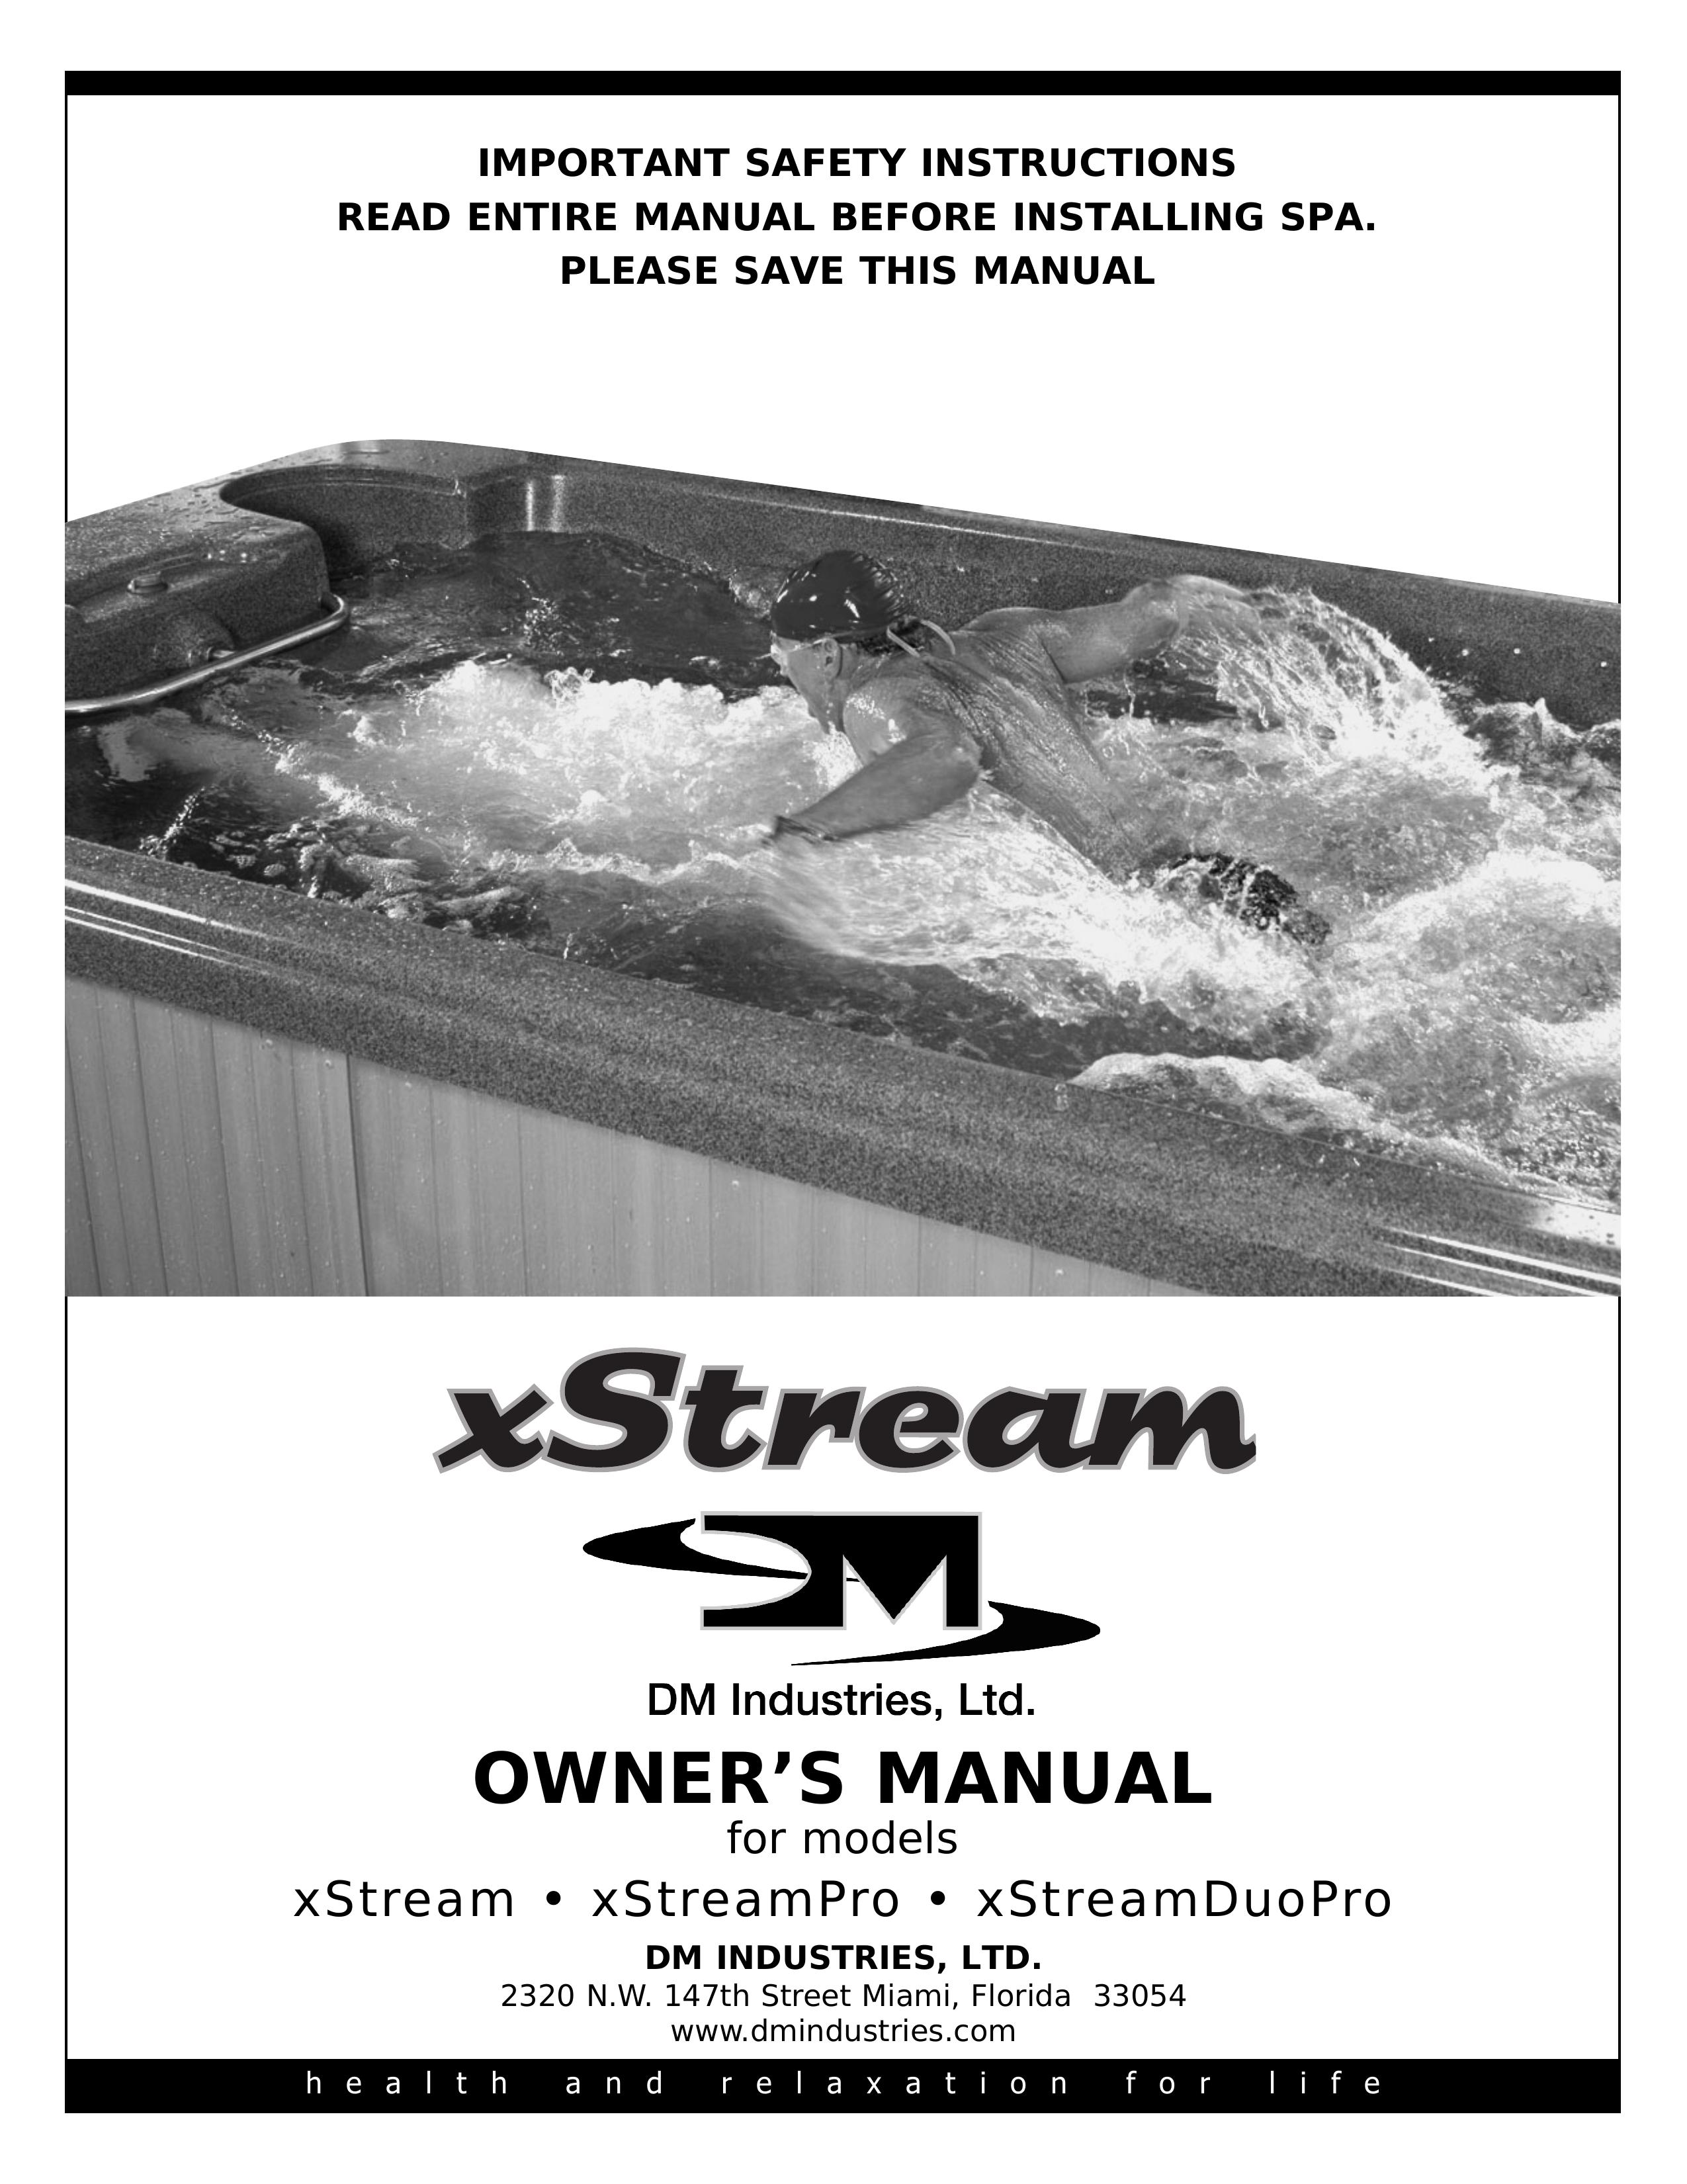 Vita Spa xStreamDuoPro Hot Tub User Manual